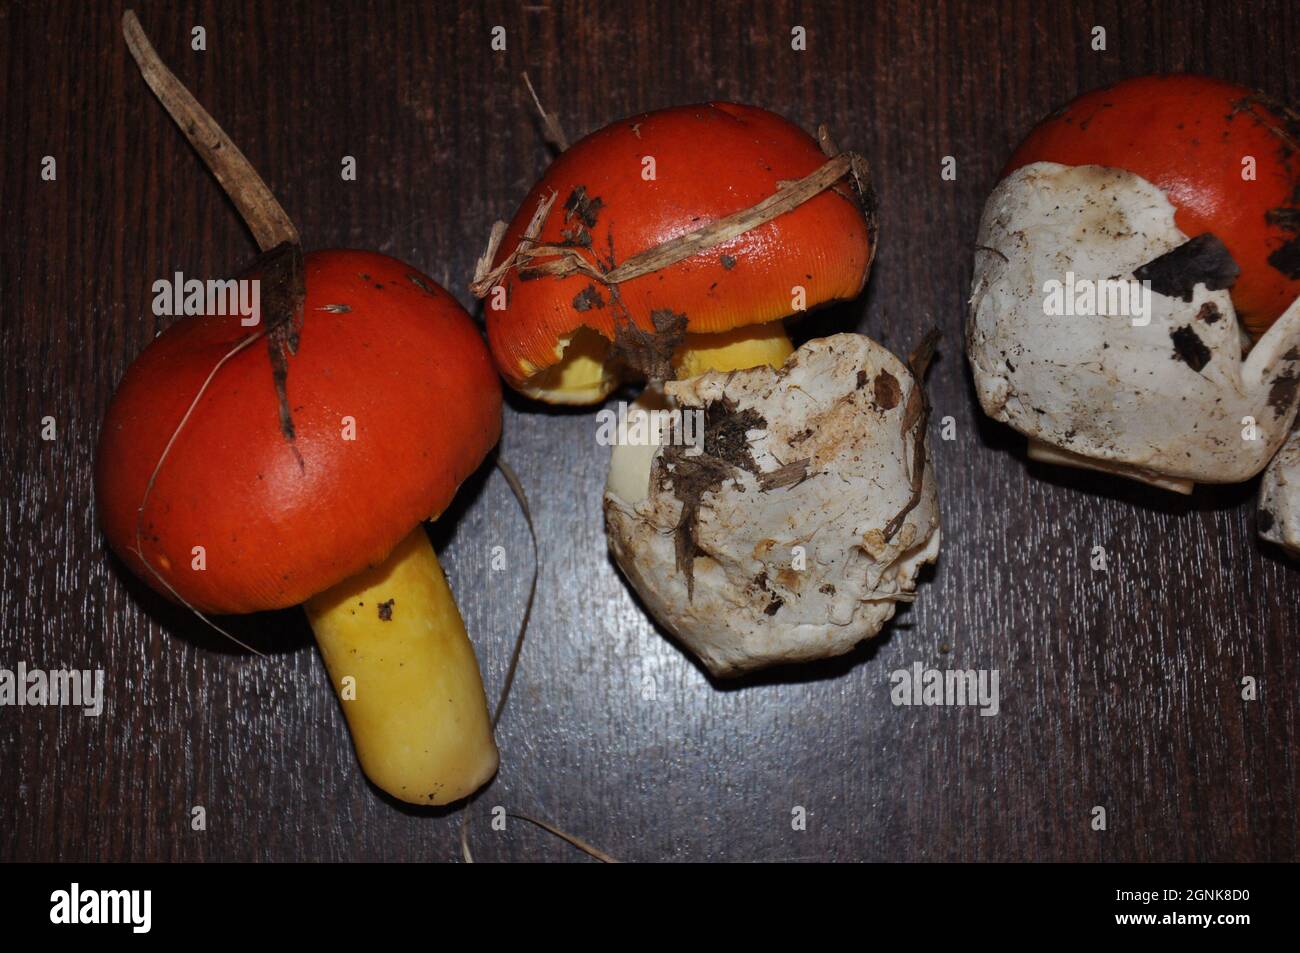 Amanita Caesarea mushroom, also known as Caesar mushroom. Forest mushrooms on a brown wooden table Stock Photo